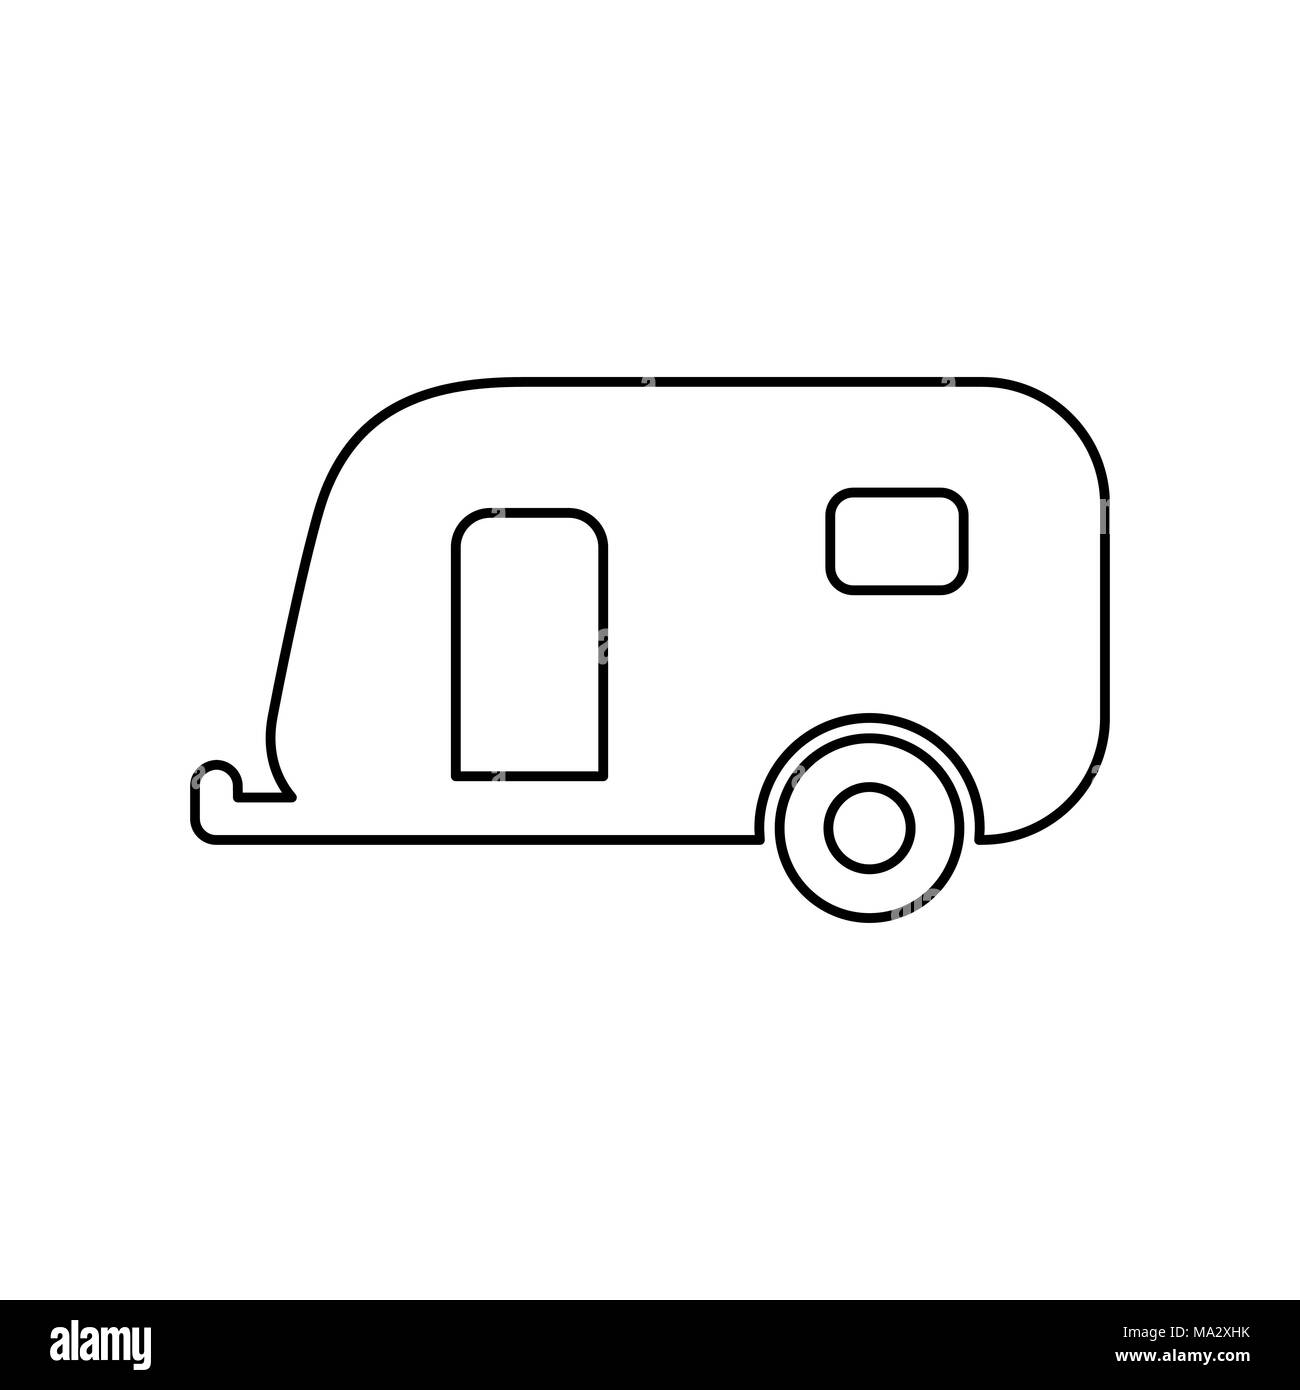 Caravan trailer icon simple flat vector illustration. Stock Vector